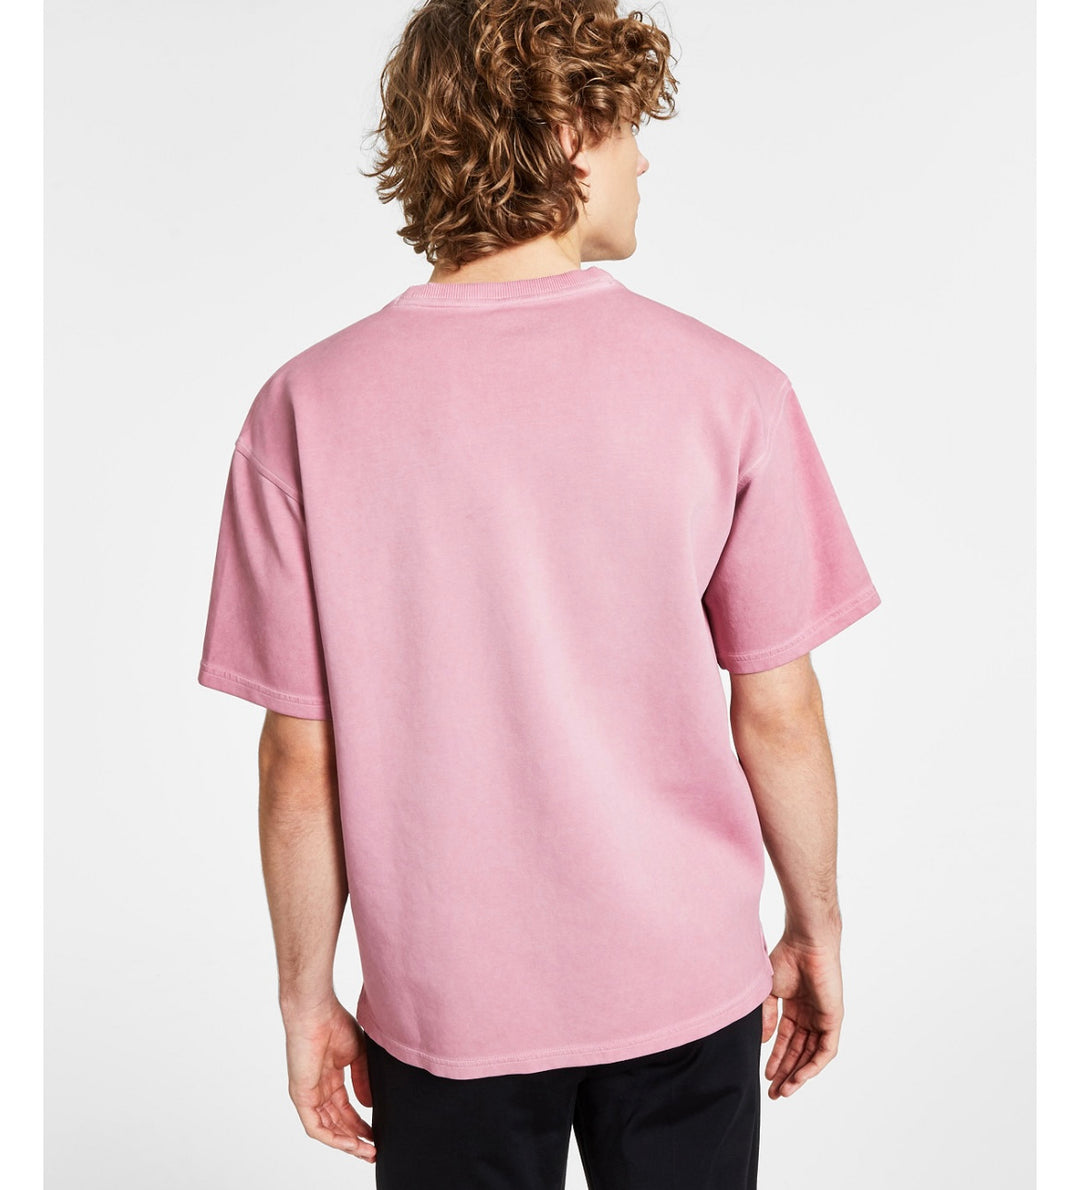 INC International Concepts Men's Garment Dyed T-Shirt